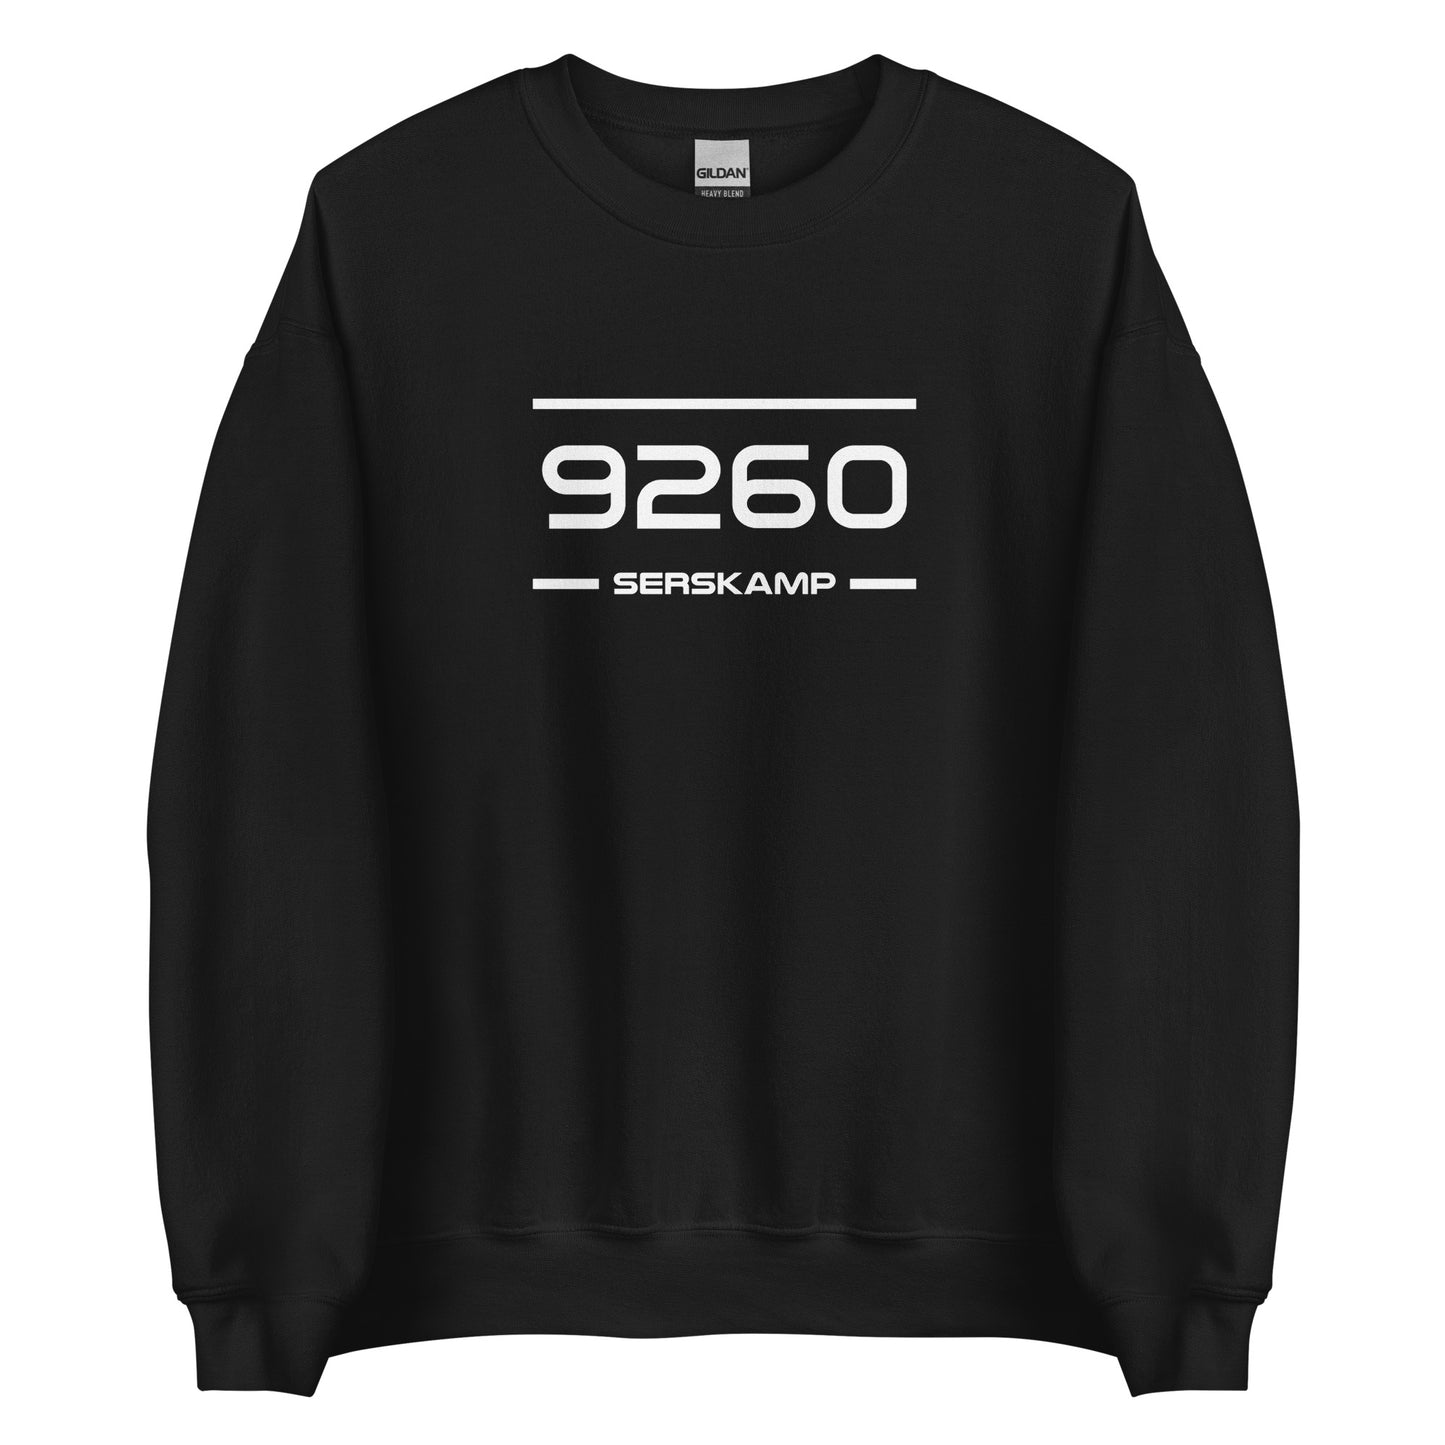 Sweater - 9260 - Serskamp (M/V)